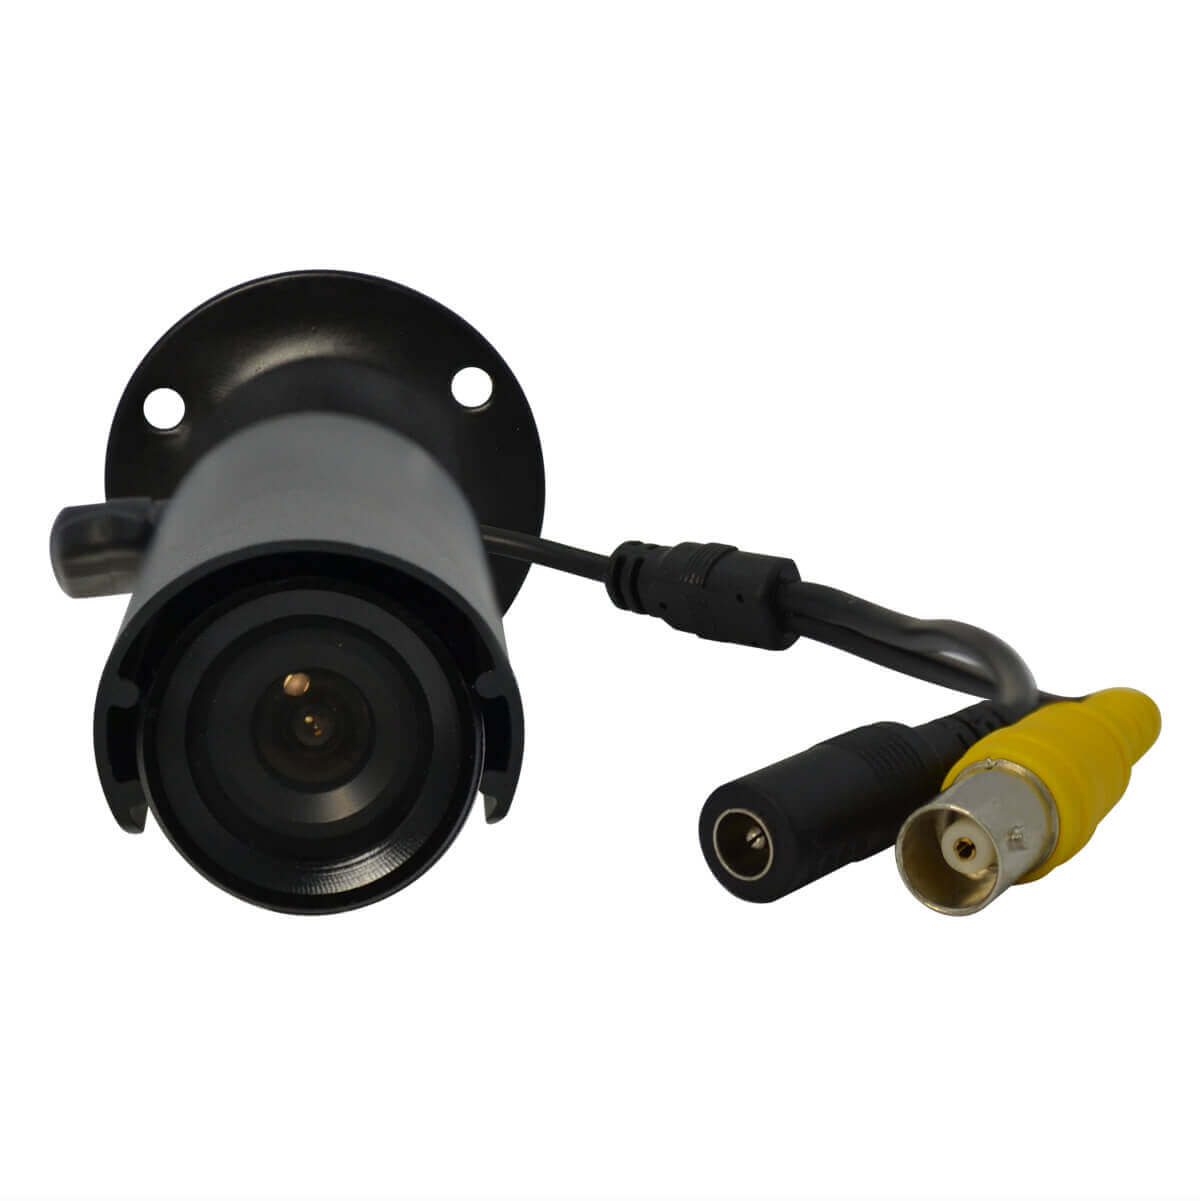 Camara tipo bazuca, Sensor Sony CCD 1/3, resolucion 420TVL lente 3.6mm